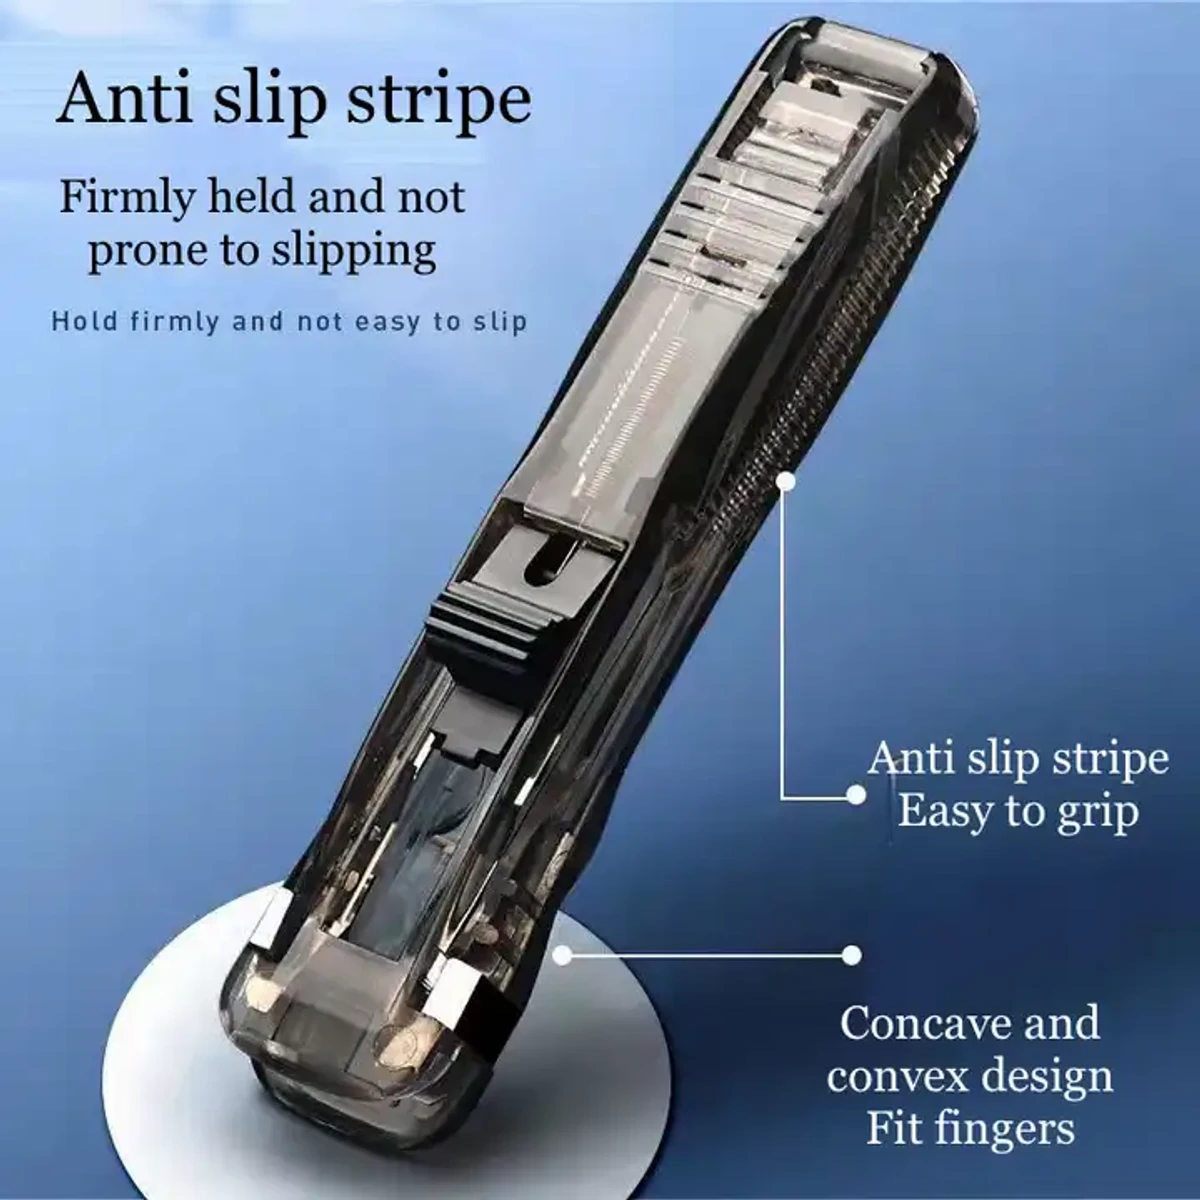 File Paper Clip Tool Stapler